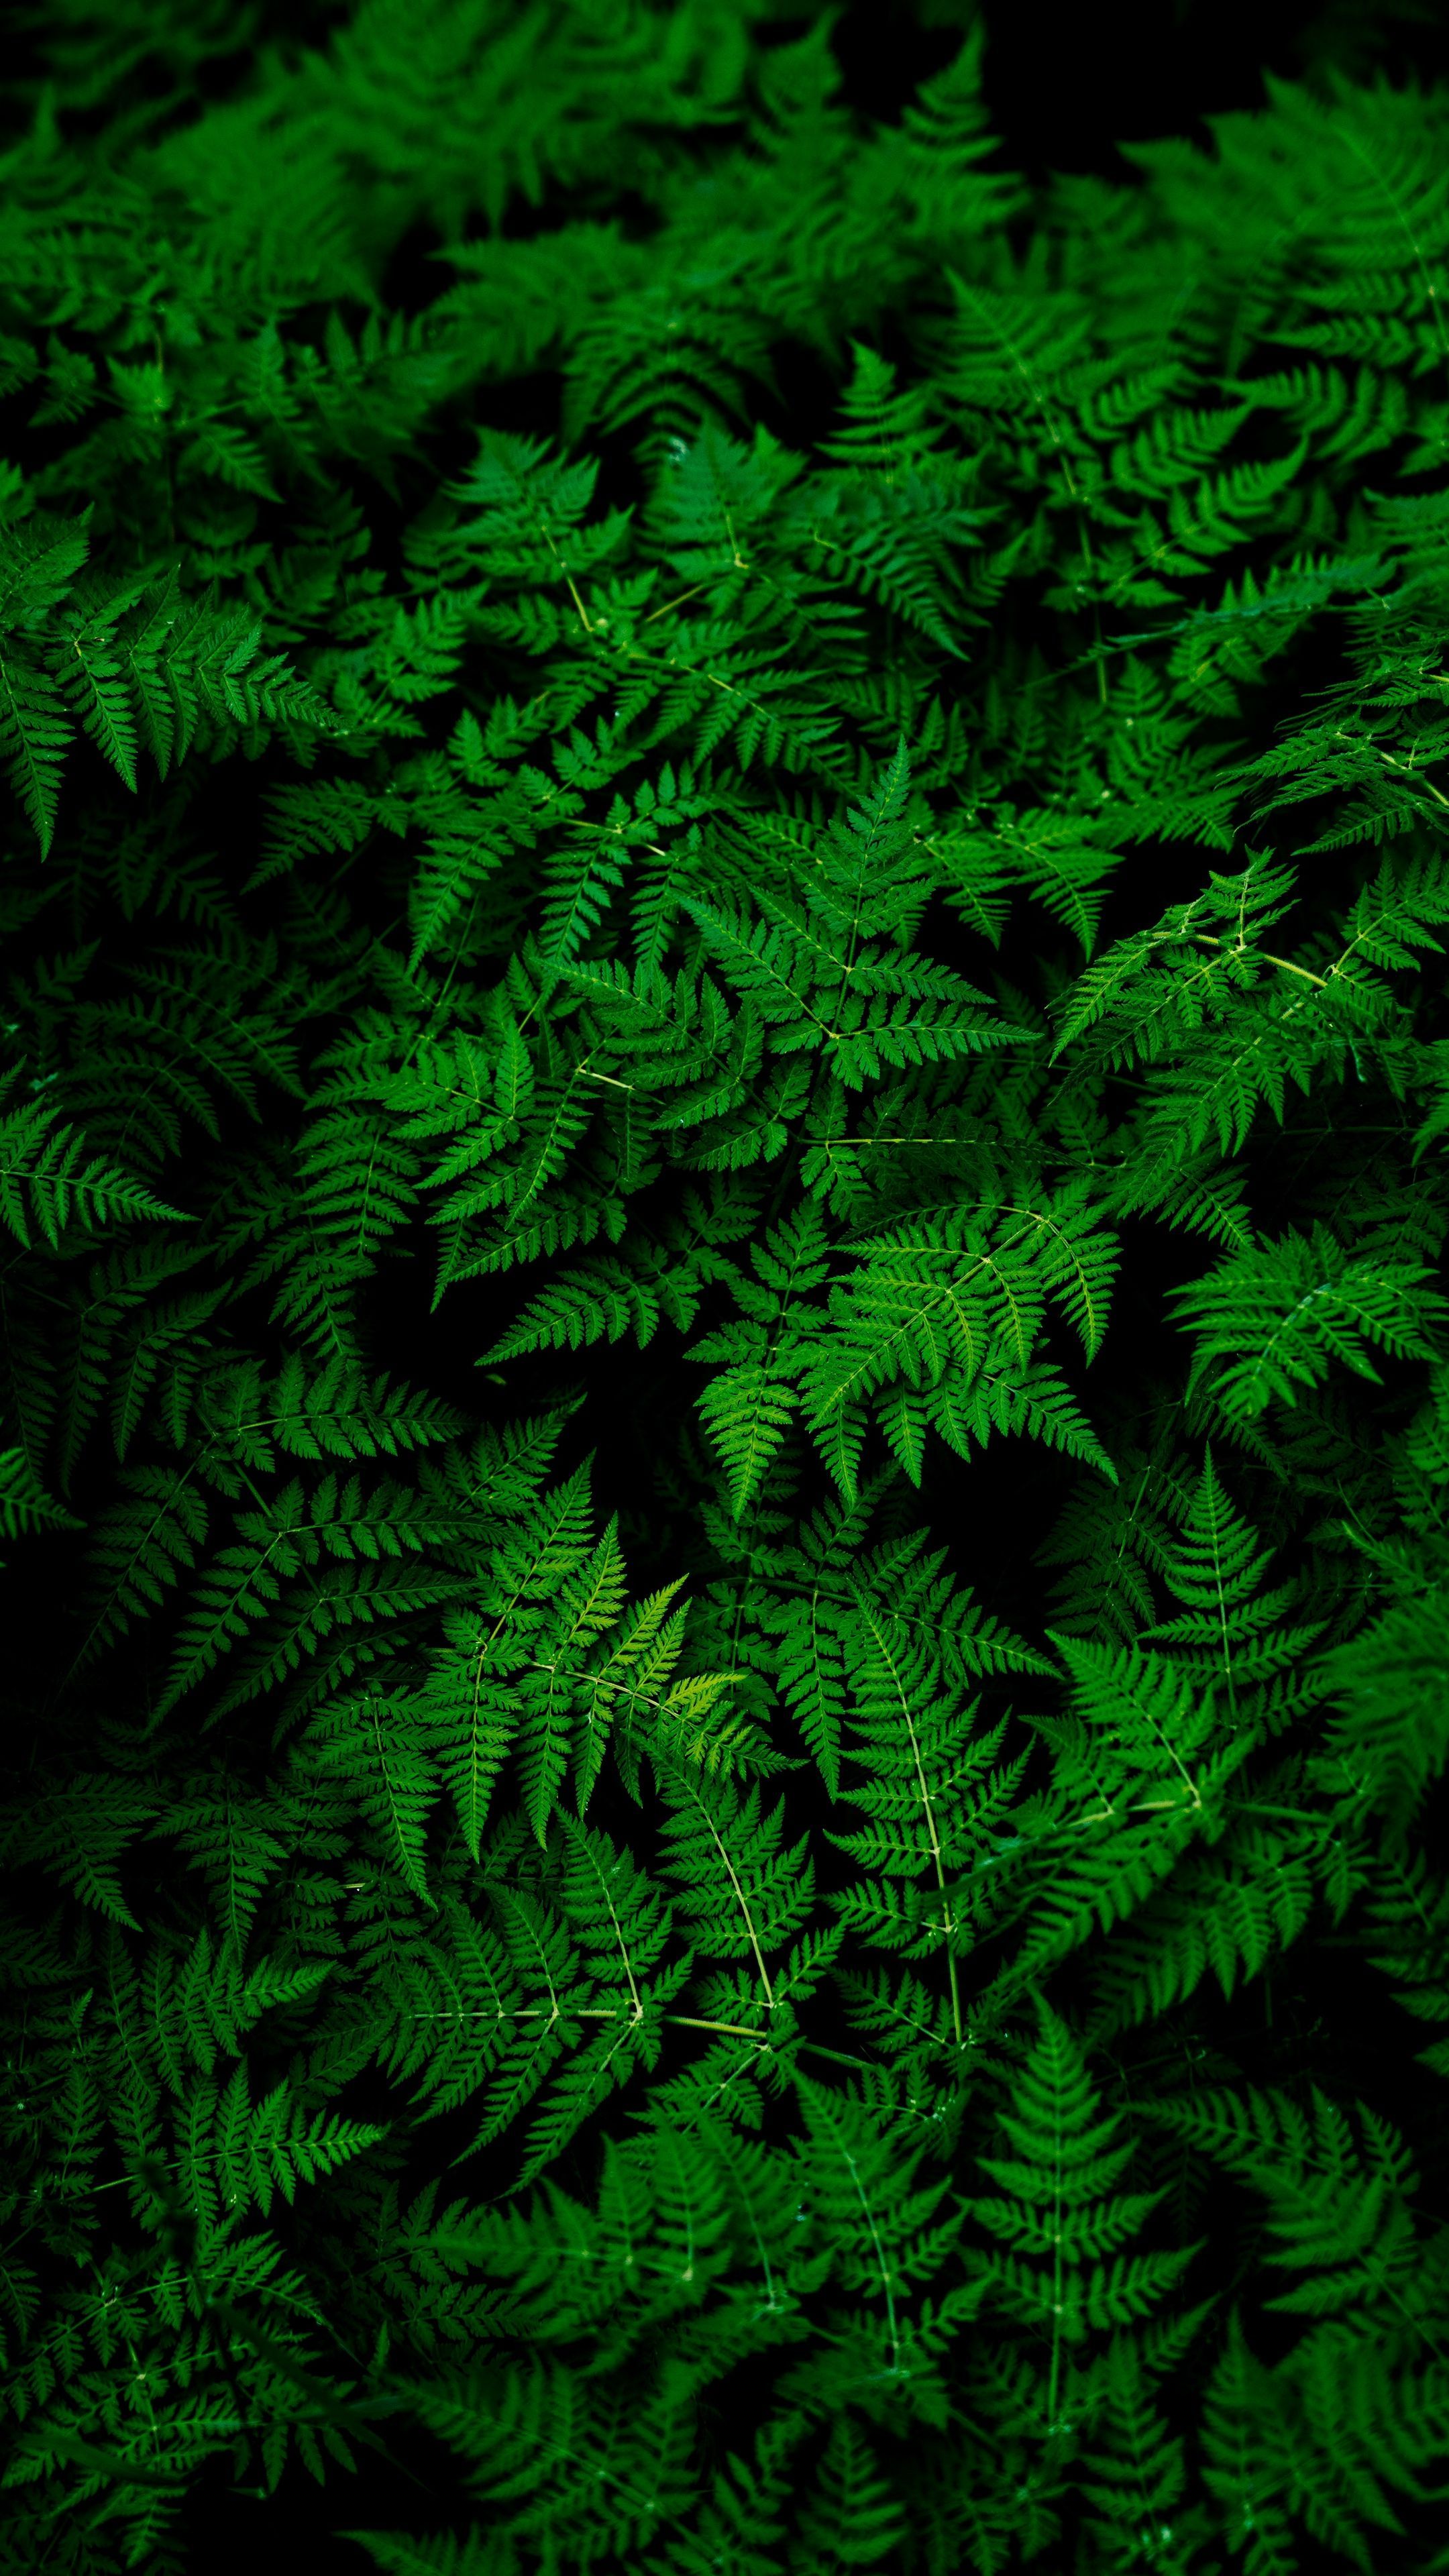 A green fern in the dark - Leaves